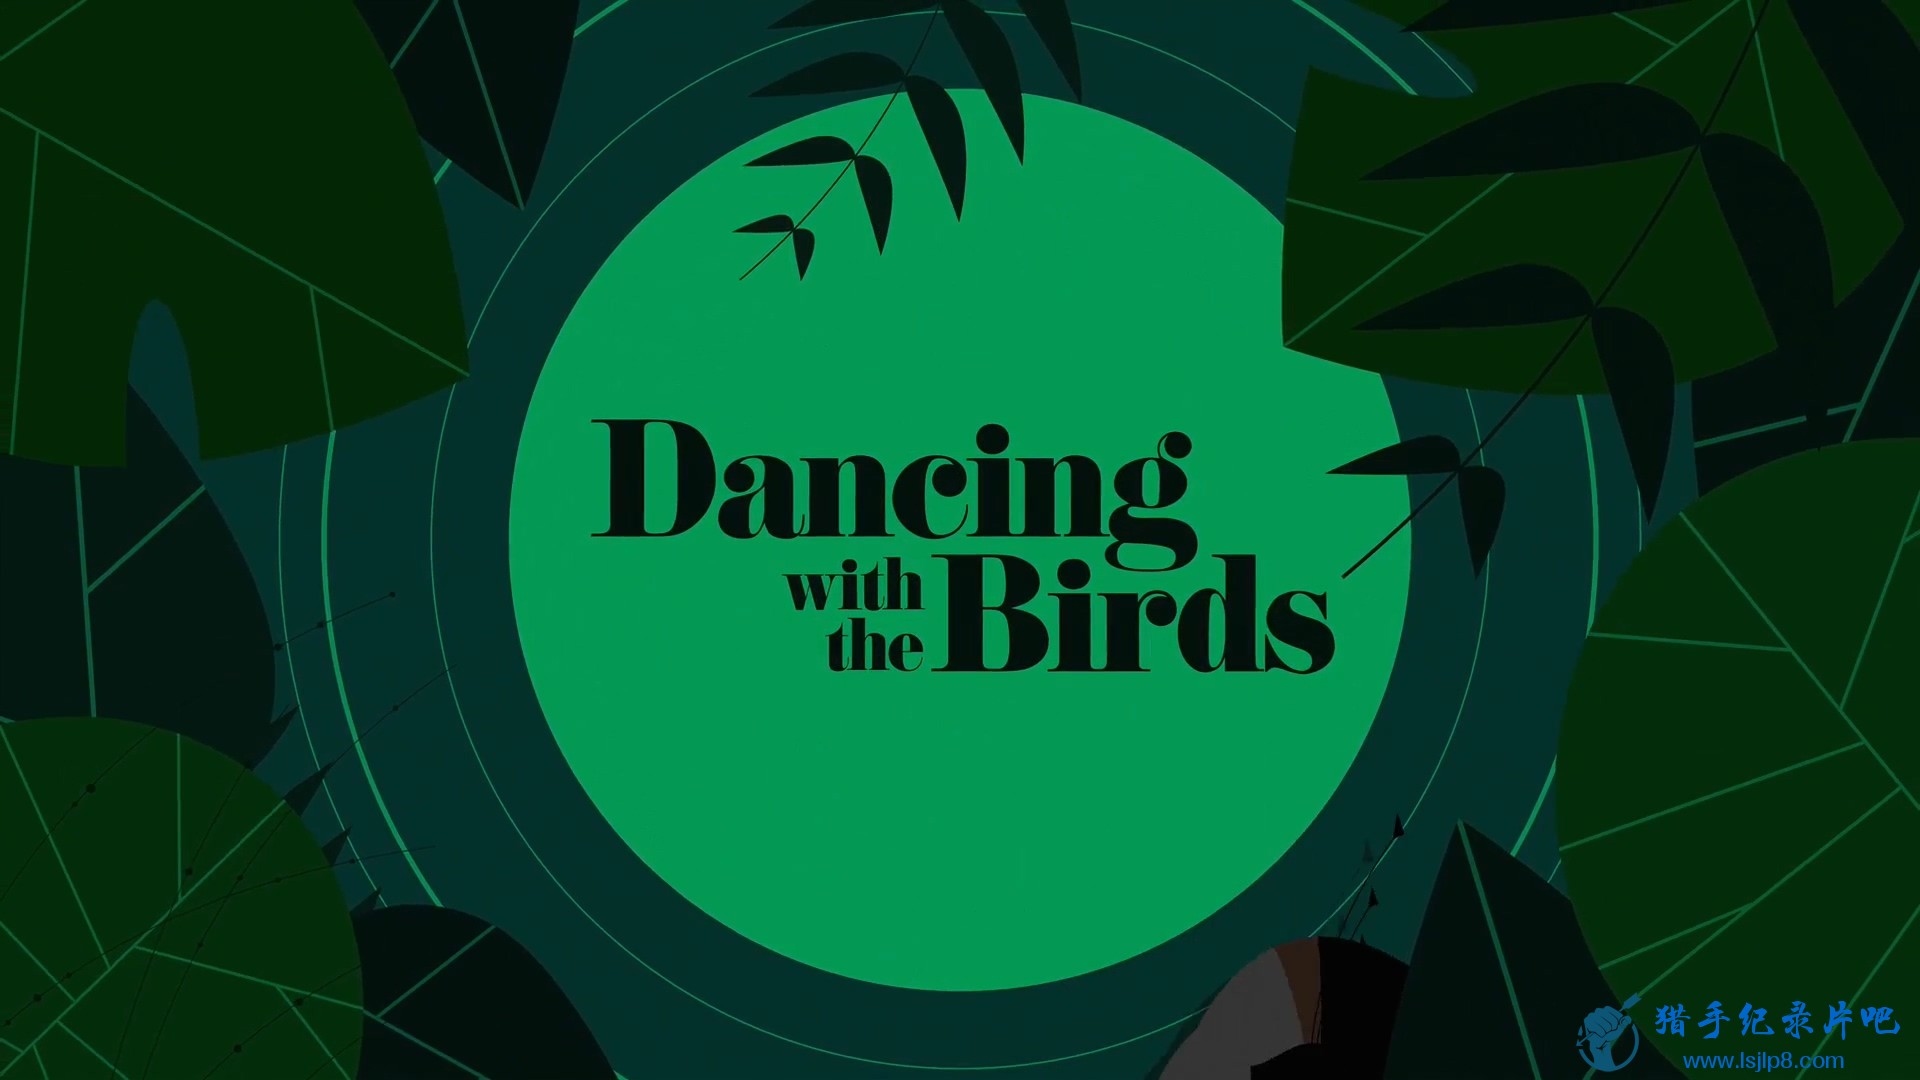  Dancing with the Birds 2019 1080p NF WEBRip x264 AAC CHS&amp;ENG  CHAOSPA.jpg